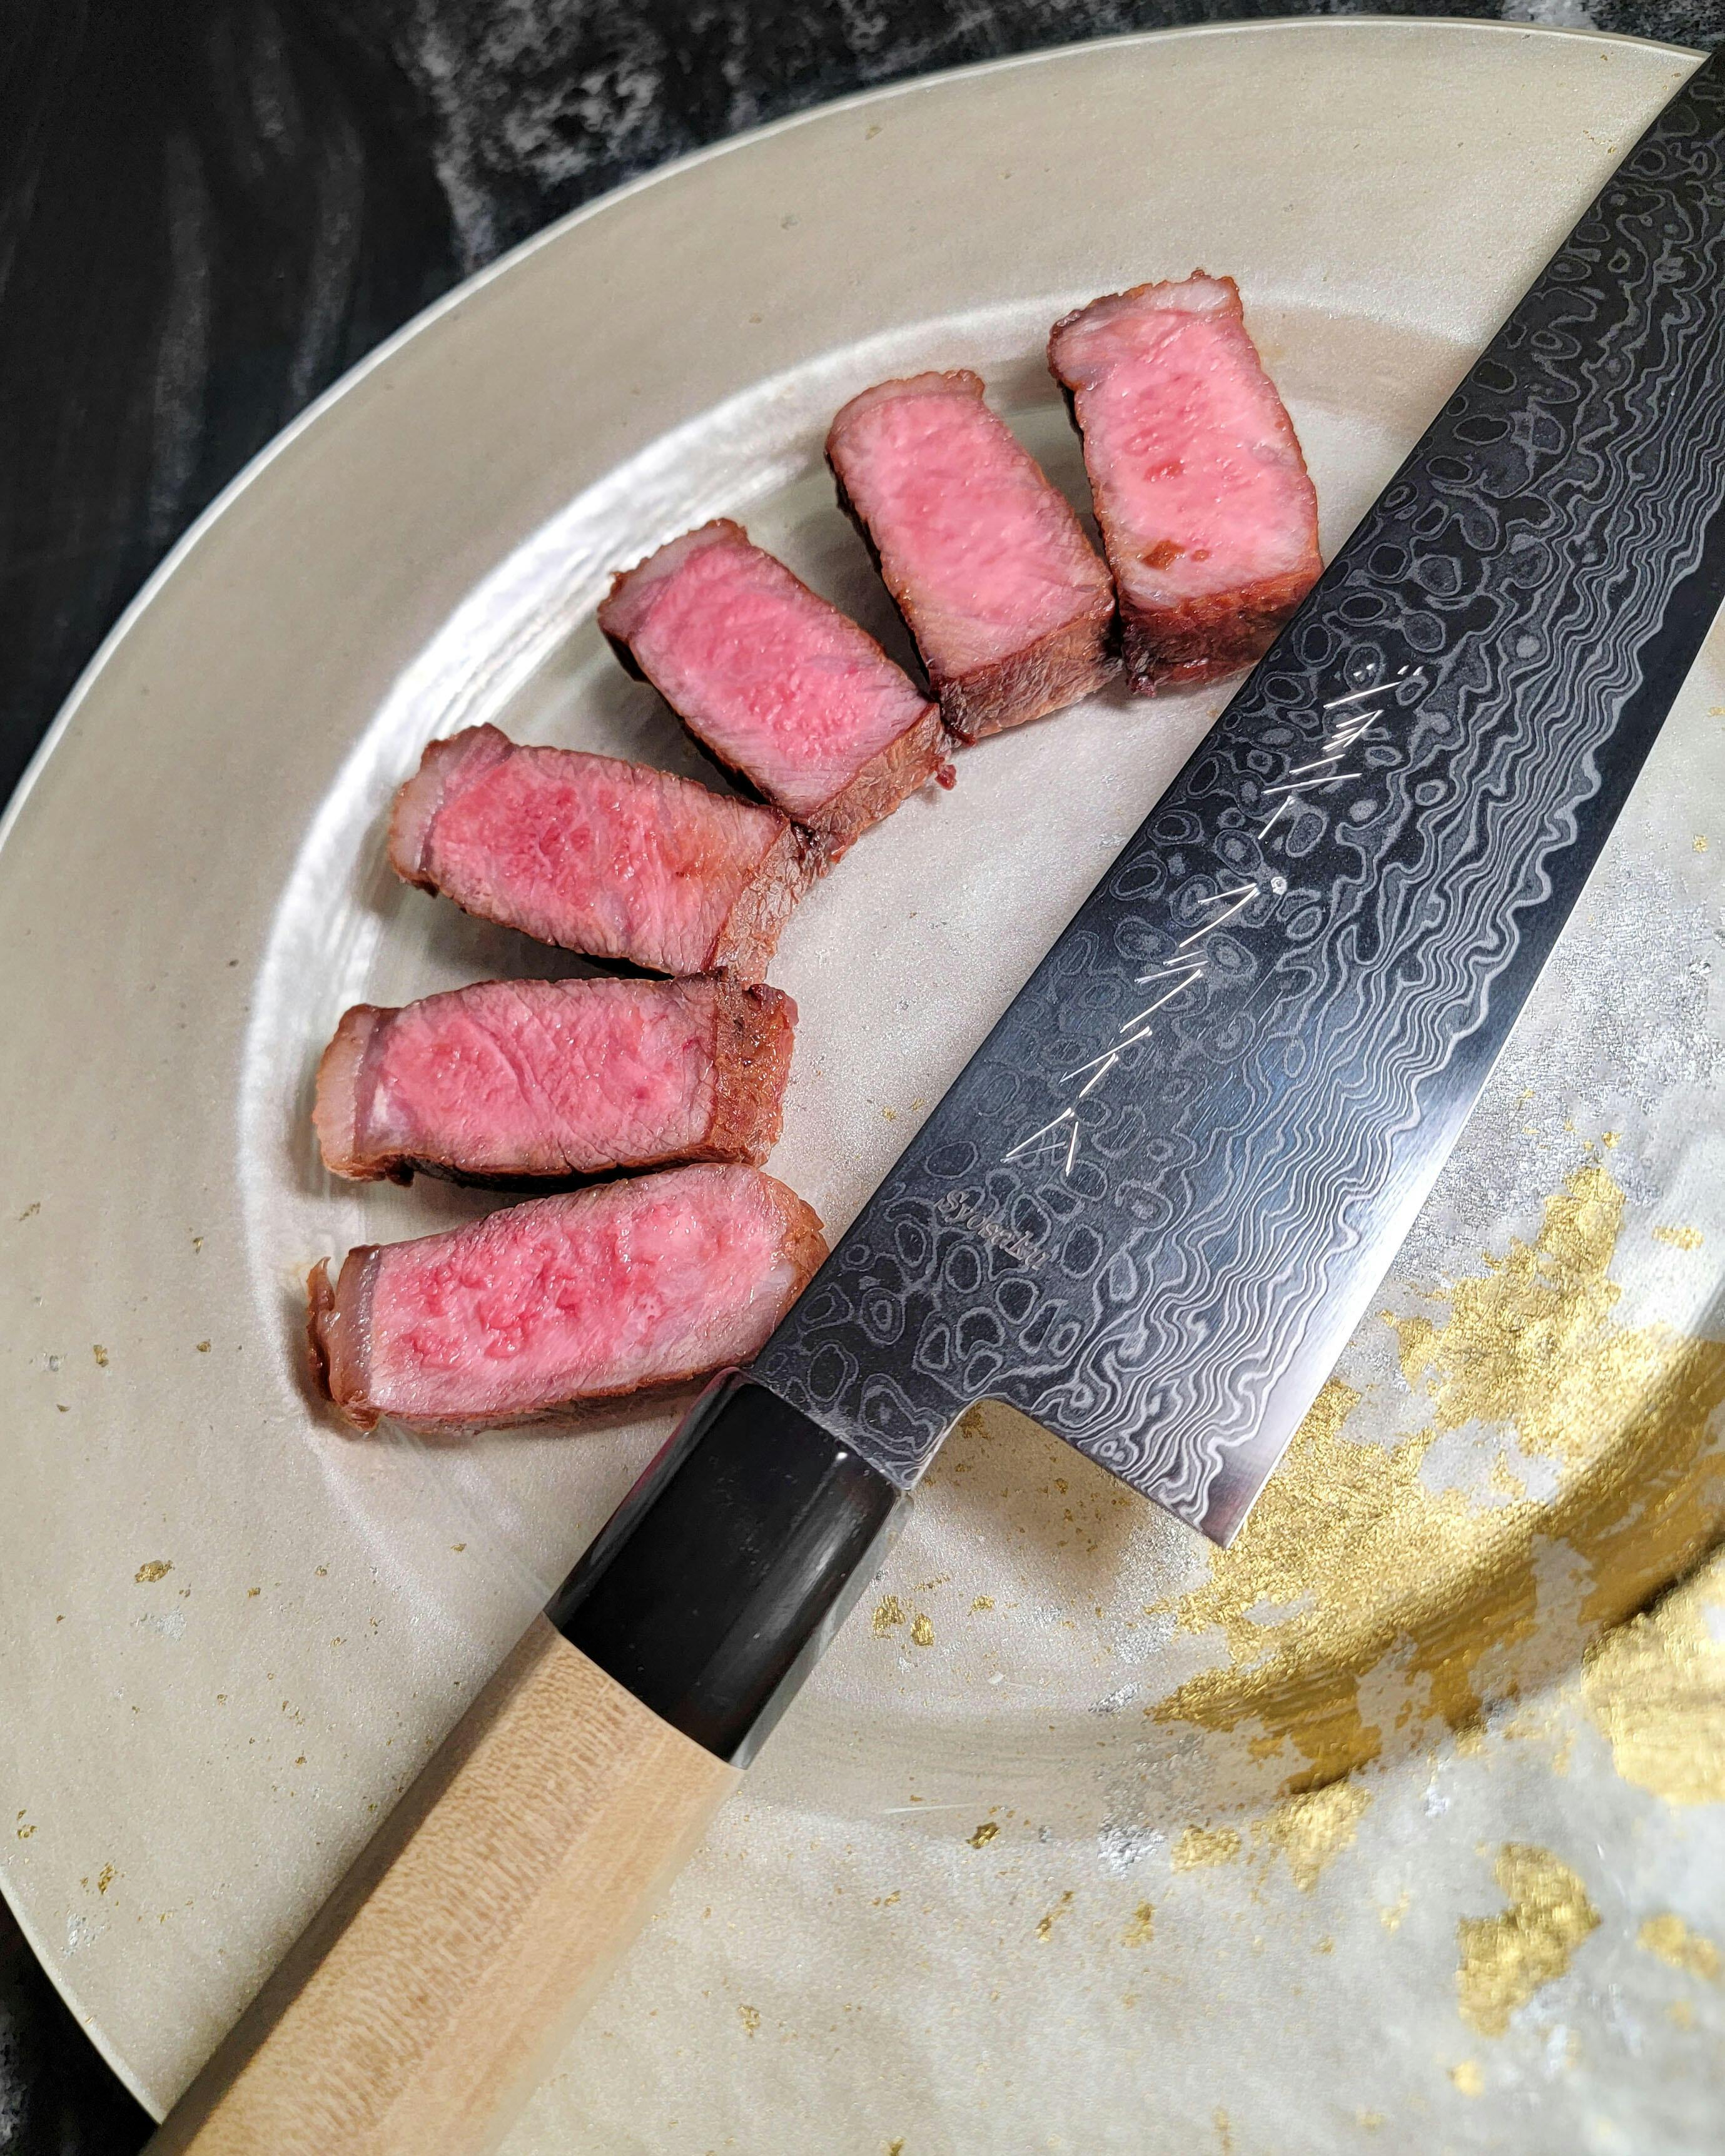 Syosaku Japanese Chef Knife Hammered Damascus VG-10 46 Layer D-Shape Magnolia Wood Handle, Gyuto 9.5-Inch (240mm)